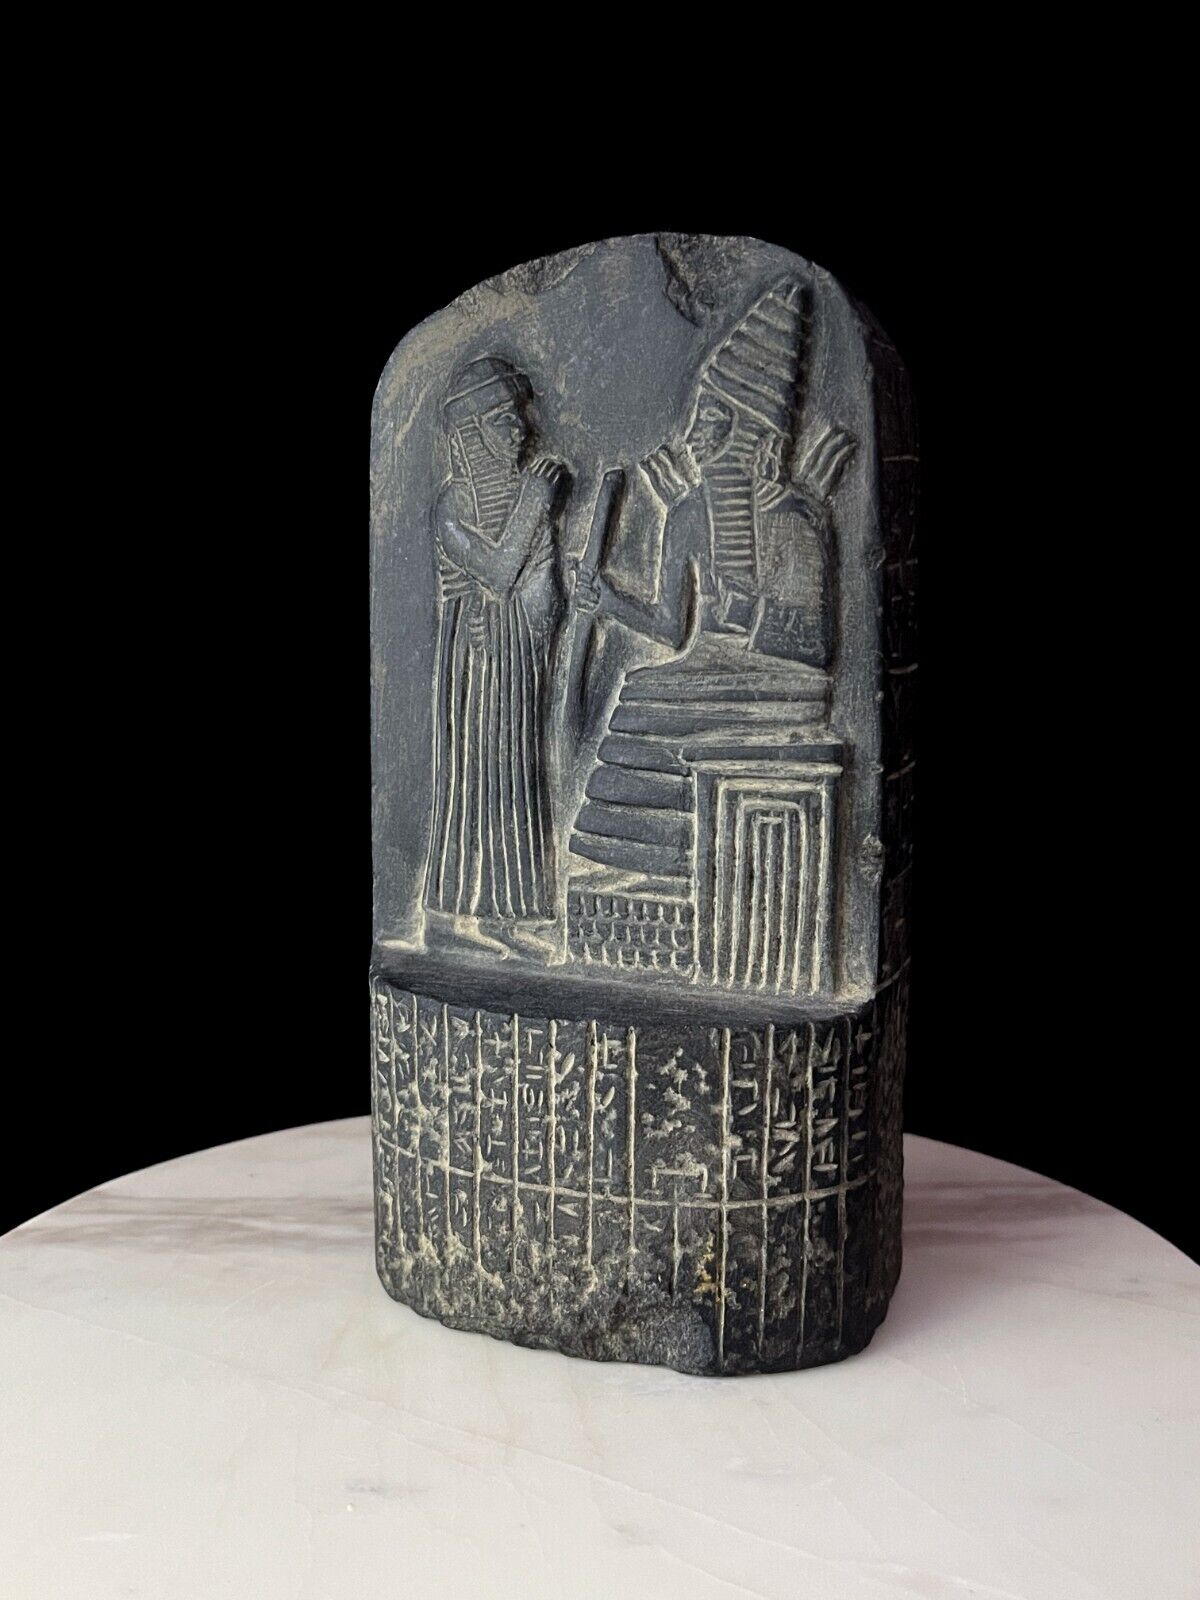 Babylon law code of Hammurabi - Akkadian Cuneiform Mesopotamian art / sculpture